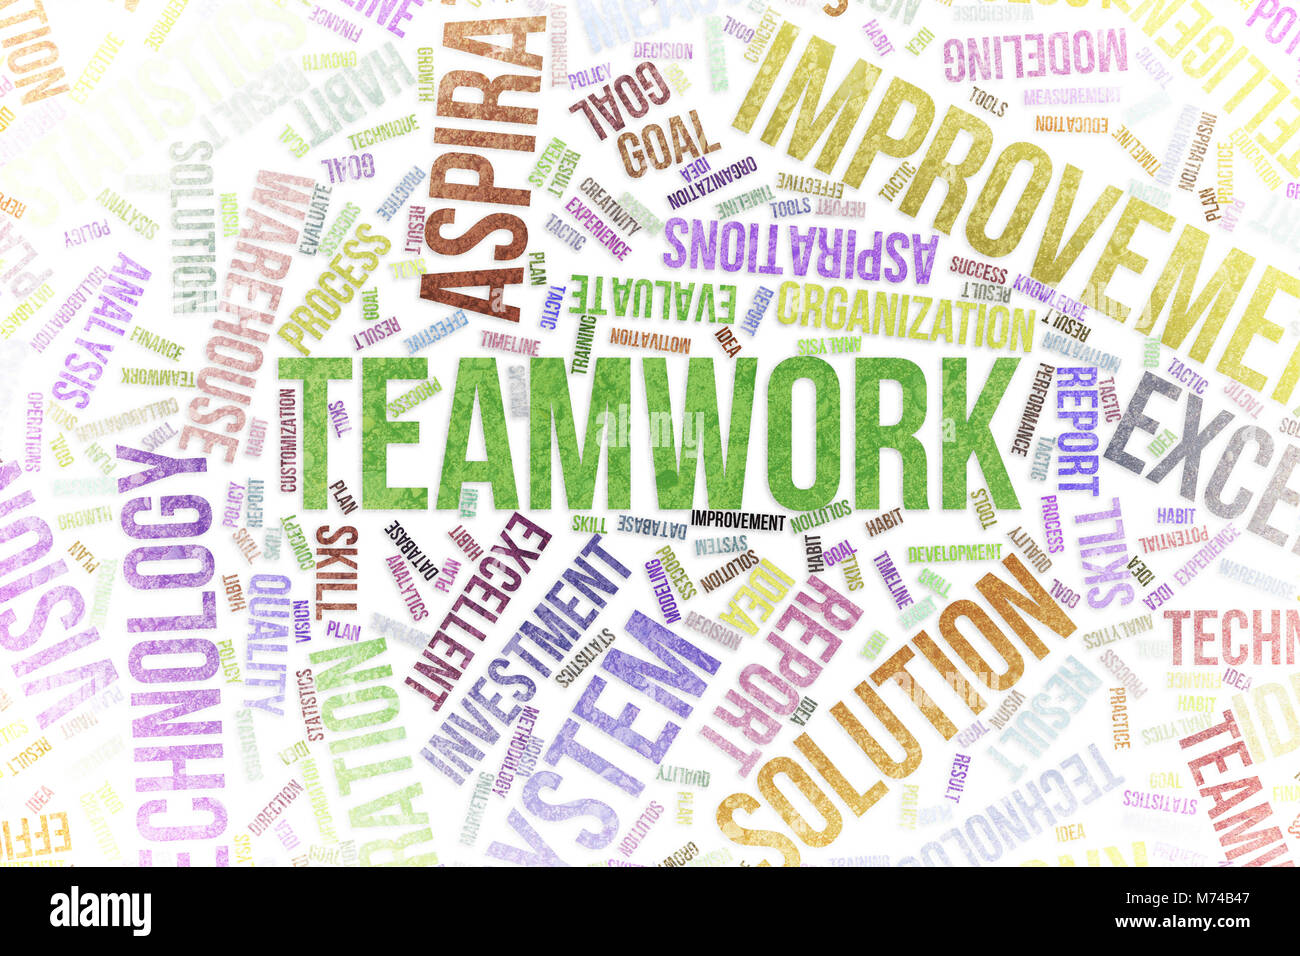 43,660 Teamwork Wallpaper Images, Stock Photos & Vectors | Shutterstock